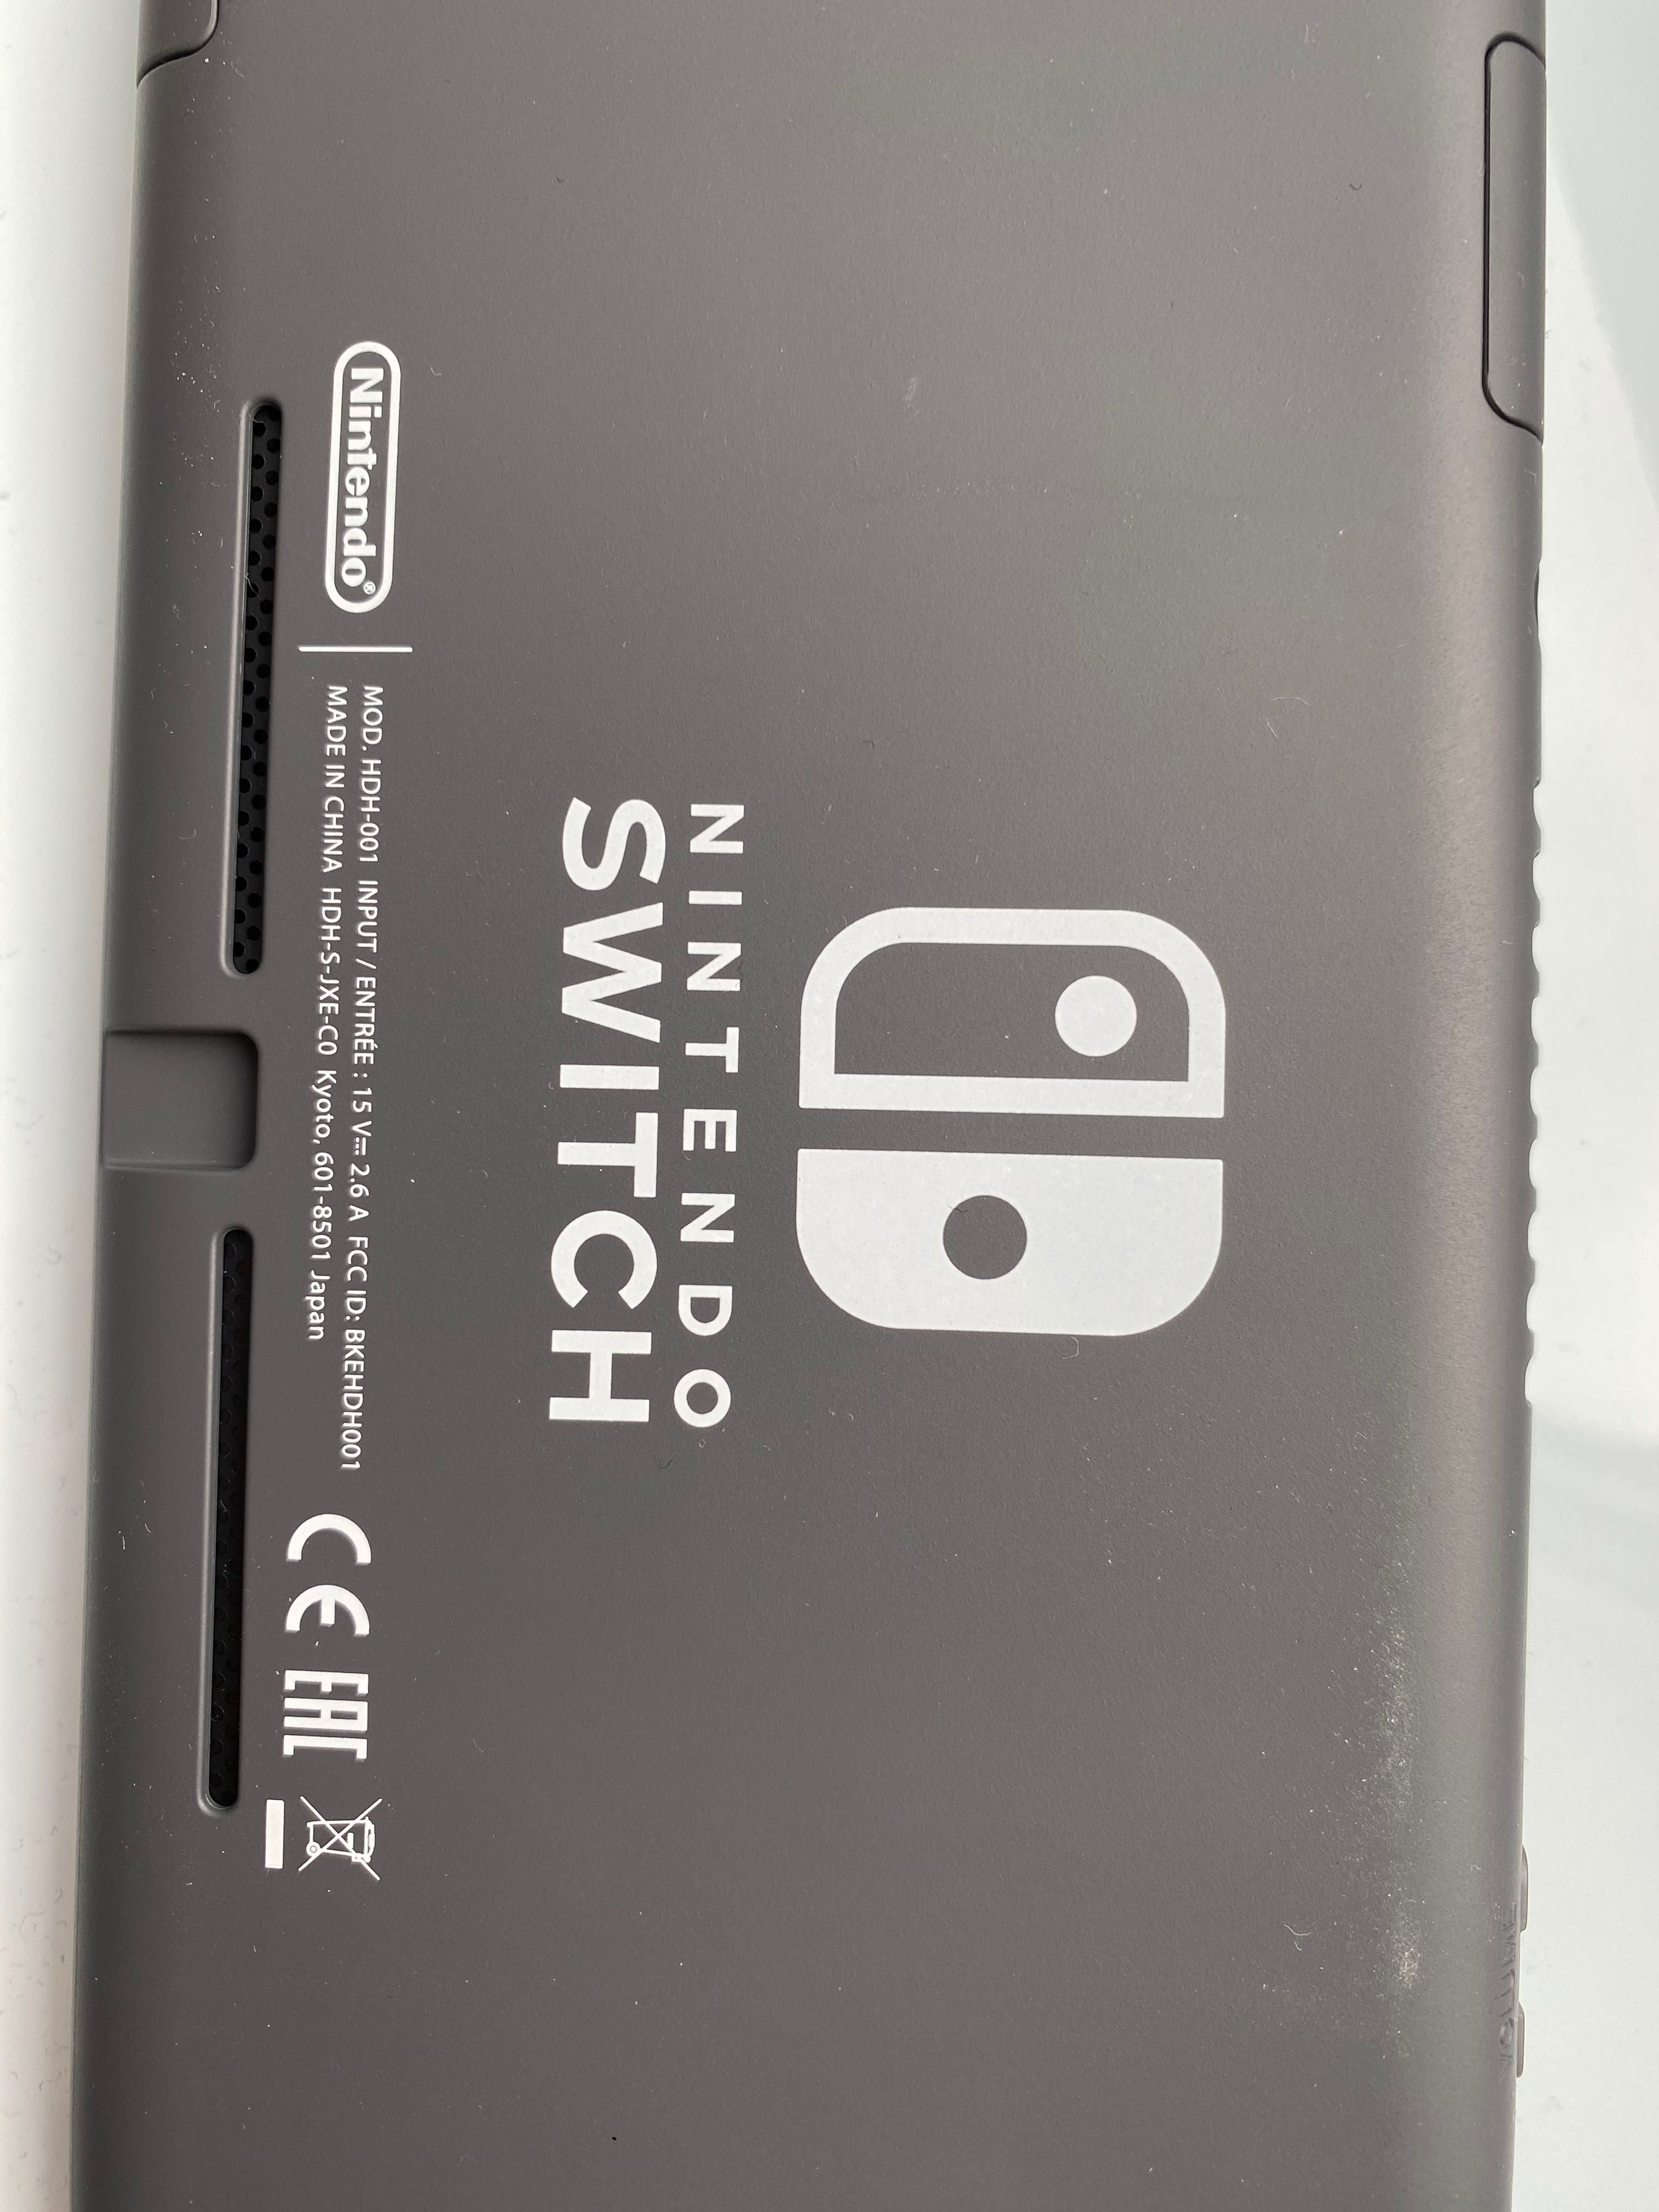 Ігрова консоль Nintendo Switch Lite Grey